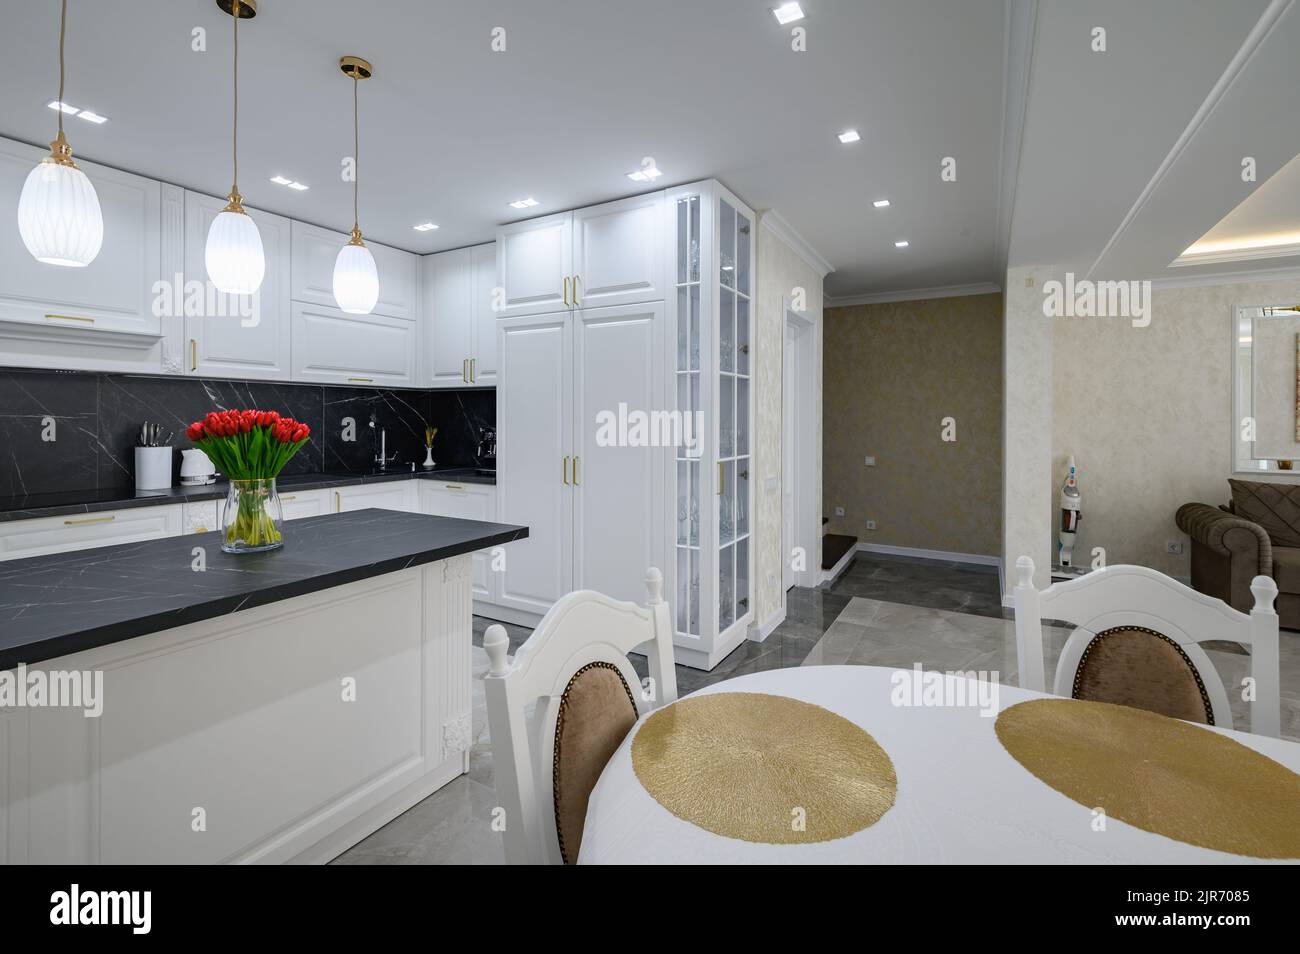 Luxurious white modern domestic kitchen with black marble worktop Stock Photo